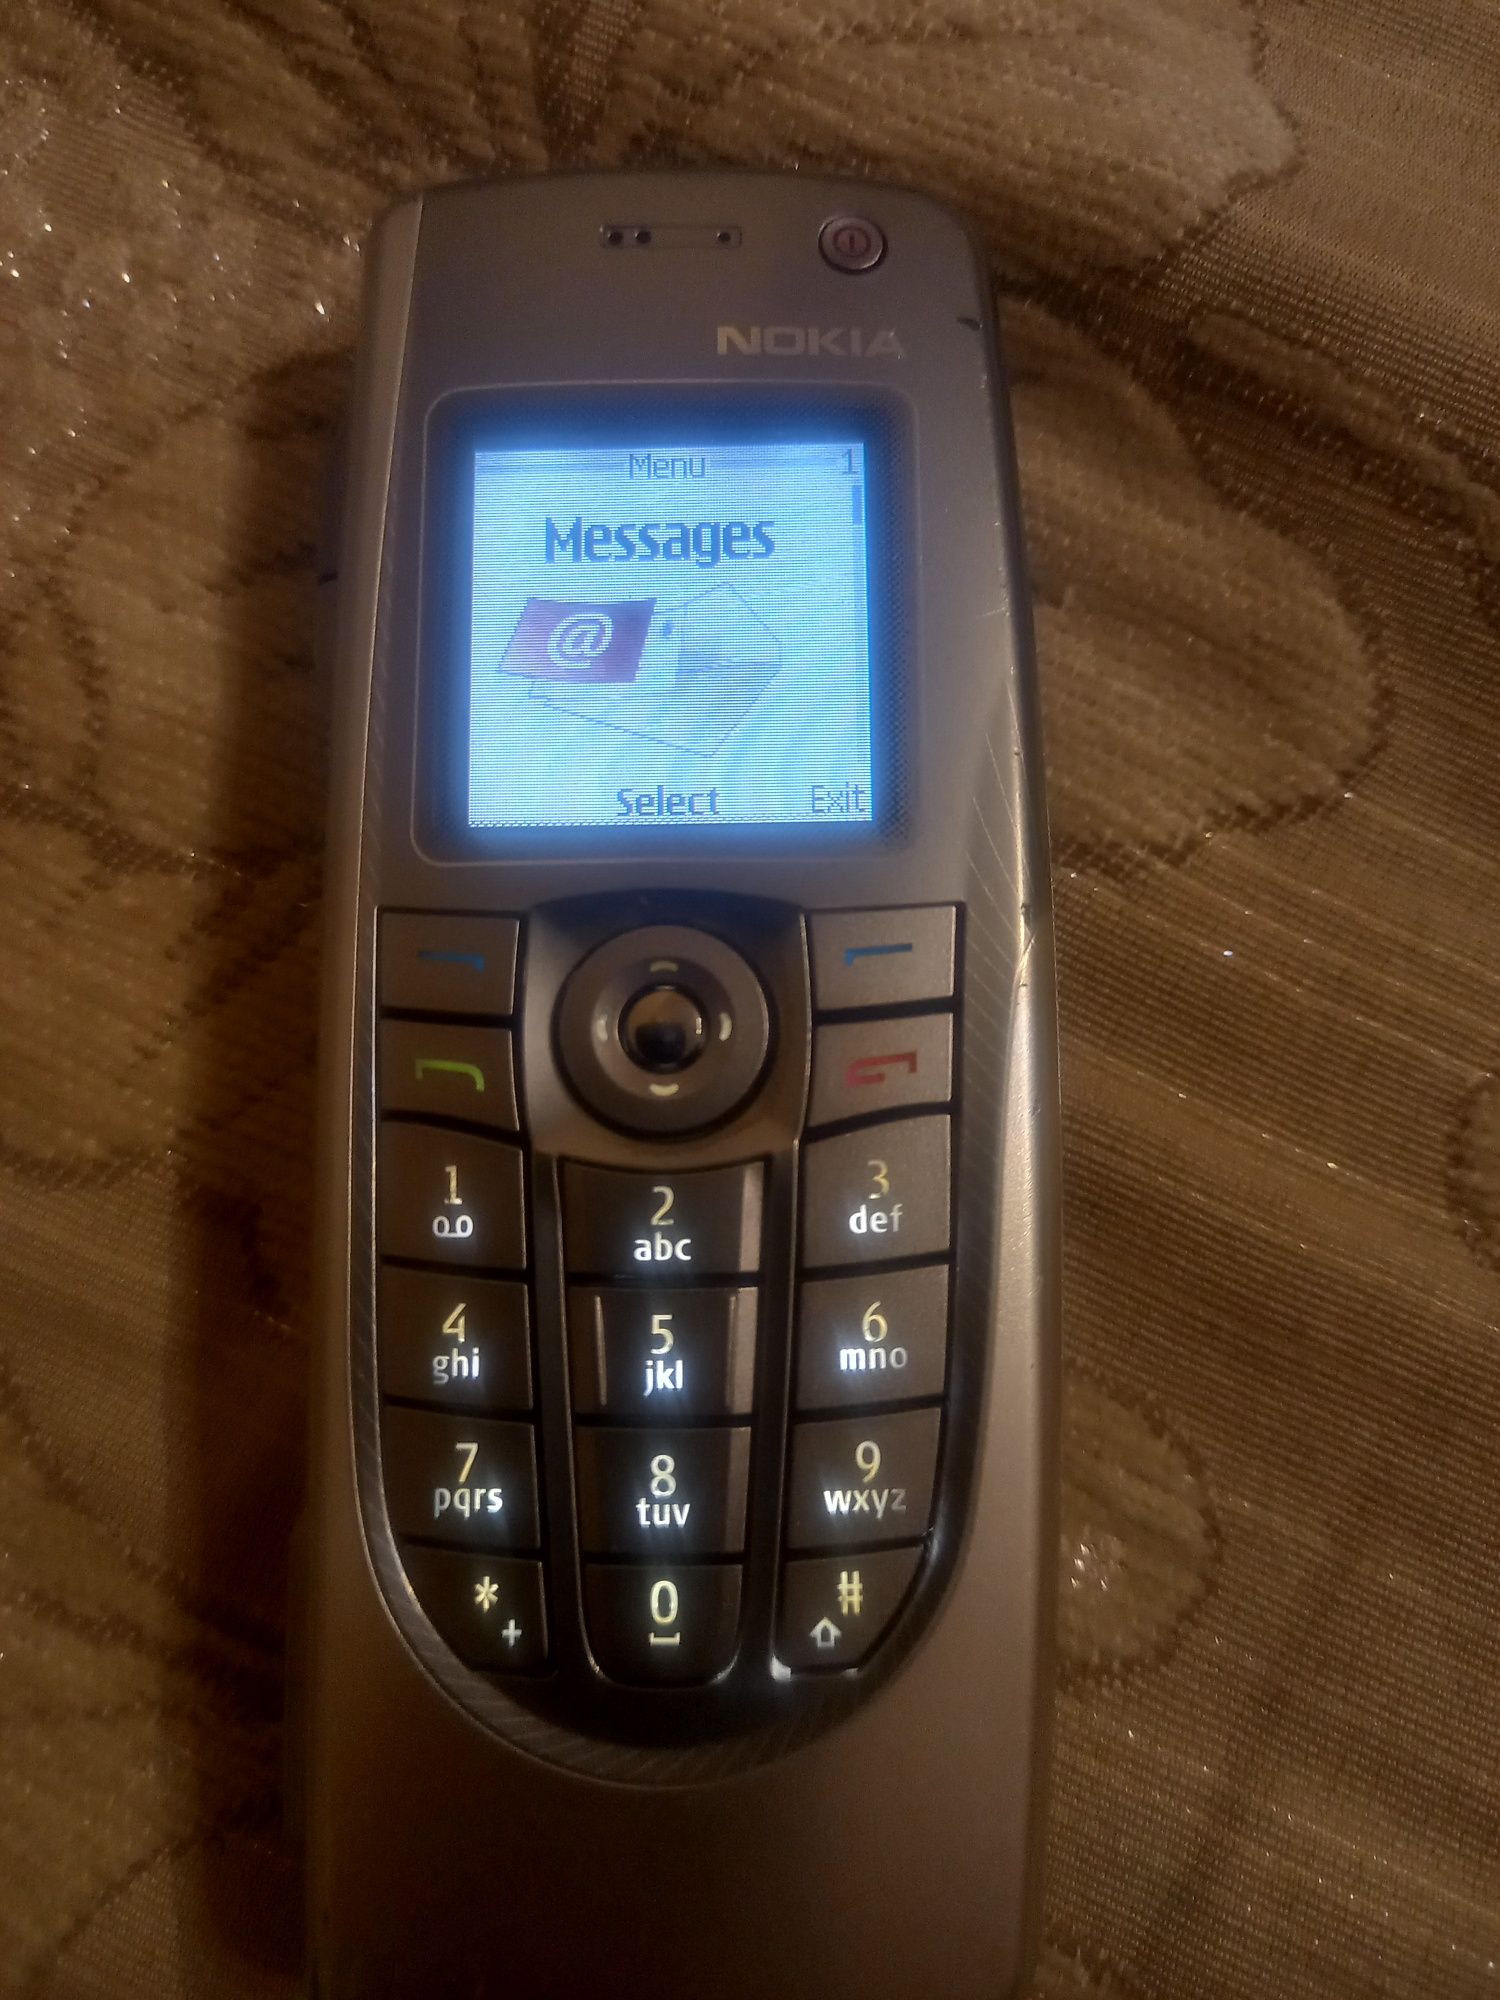 Nokia 9300 communicator